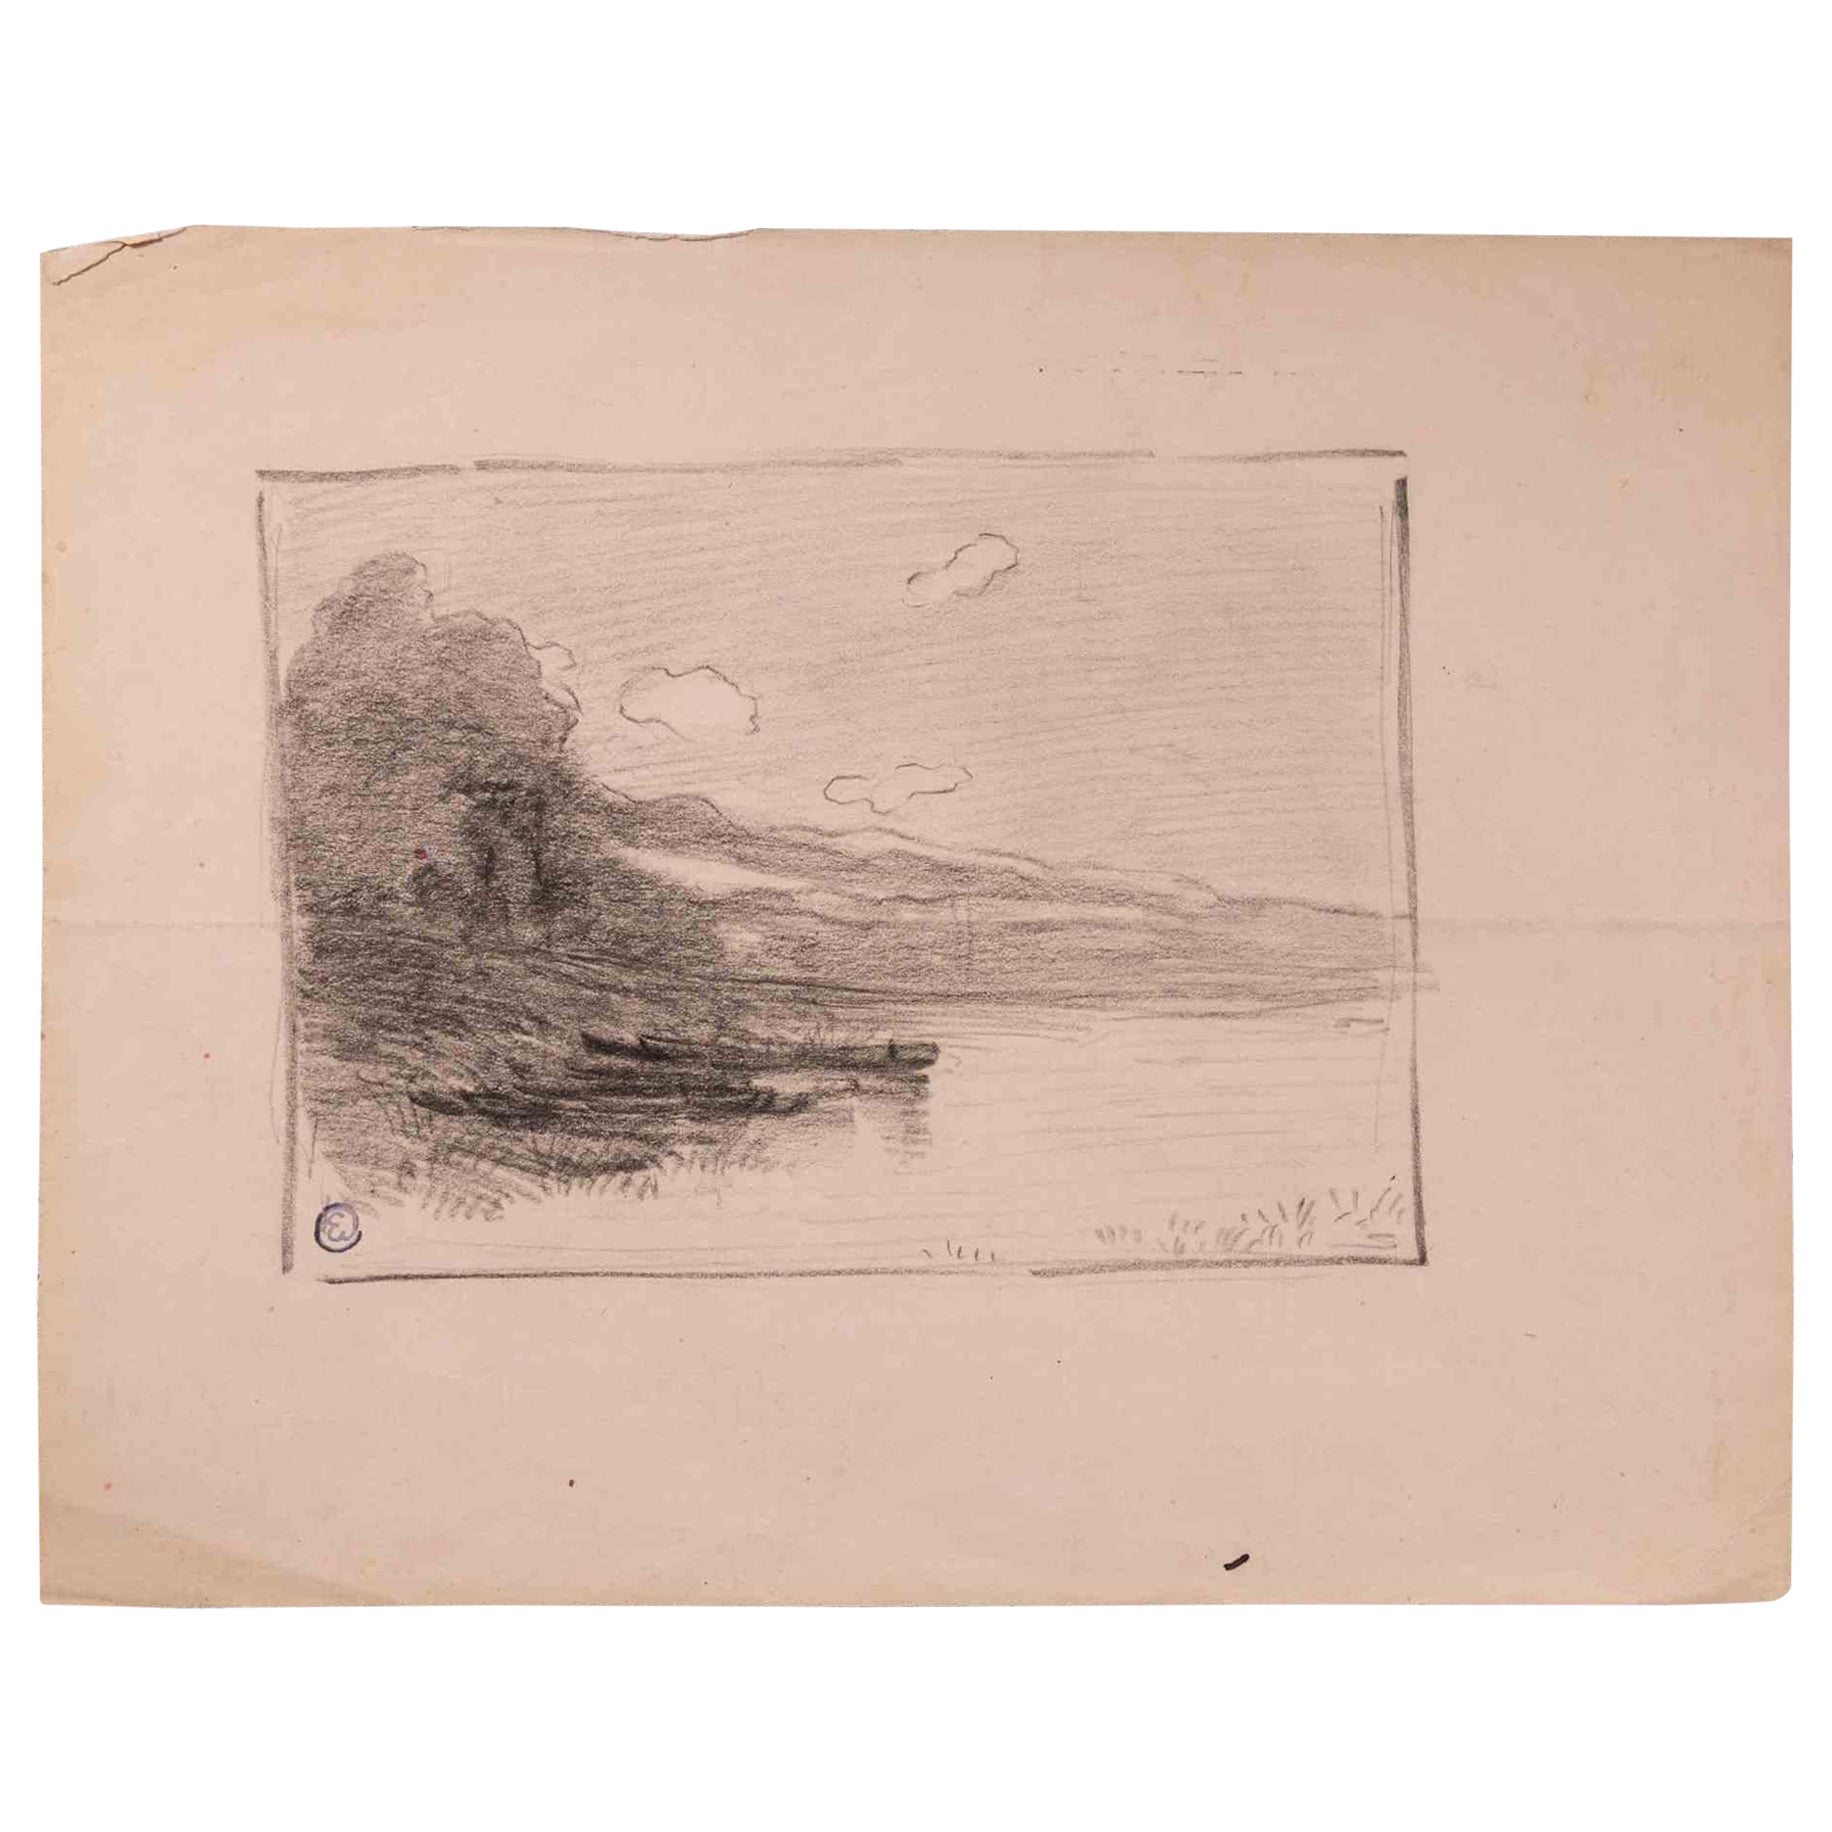 Landscape - Original Drawing by Edmond Cuisinier - Early 20th Century